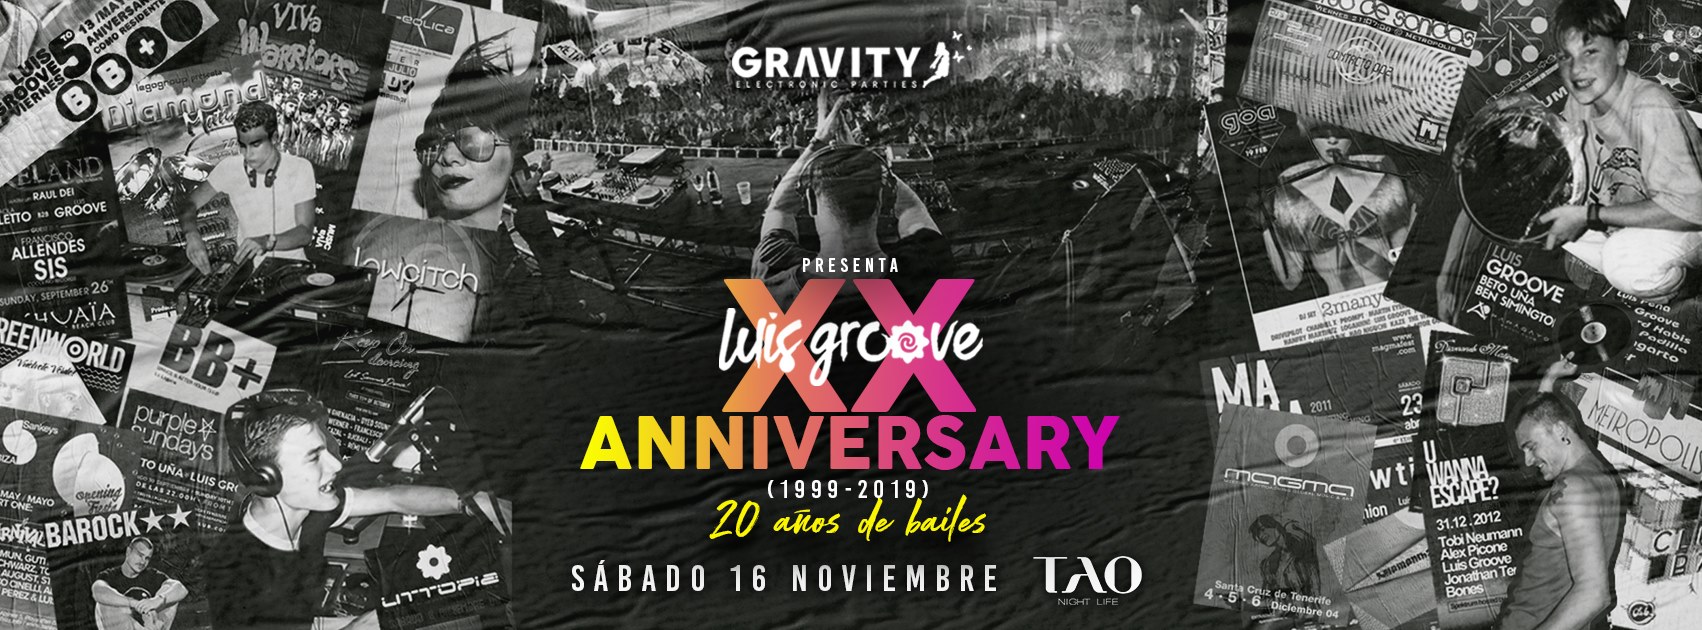 gravity presenta luis groove xx anniversary